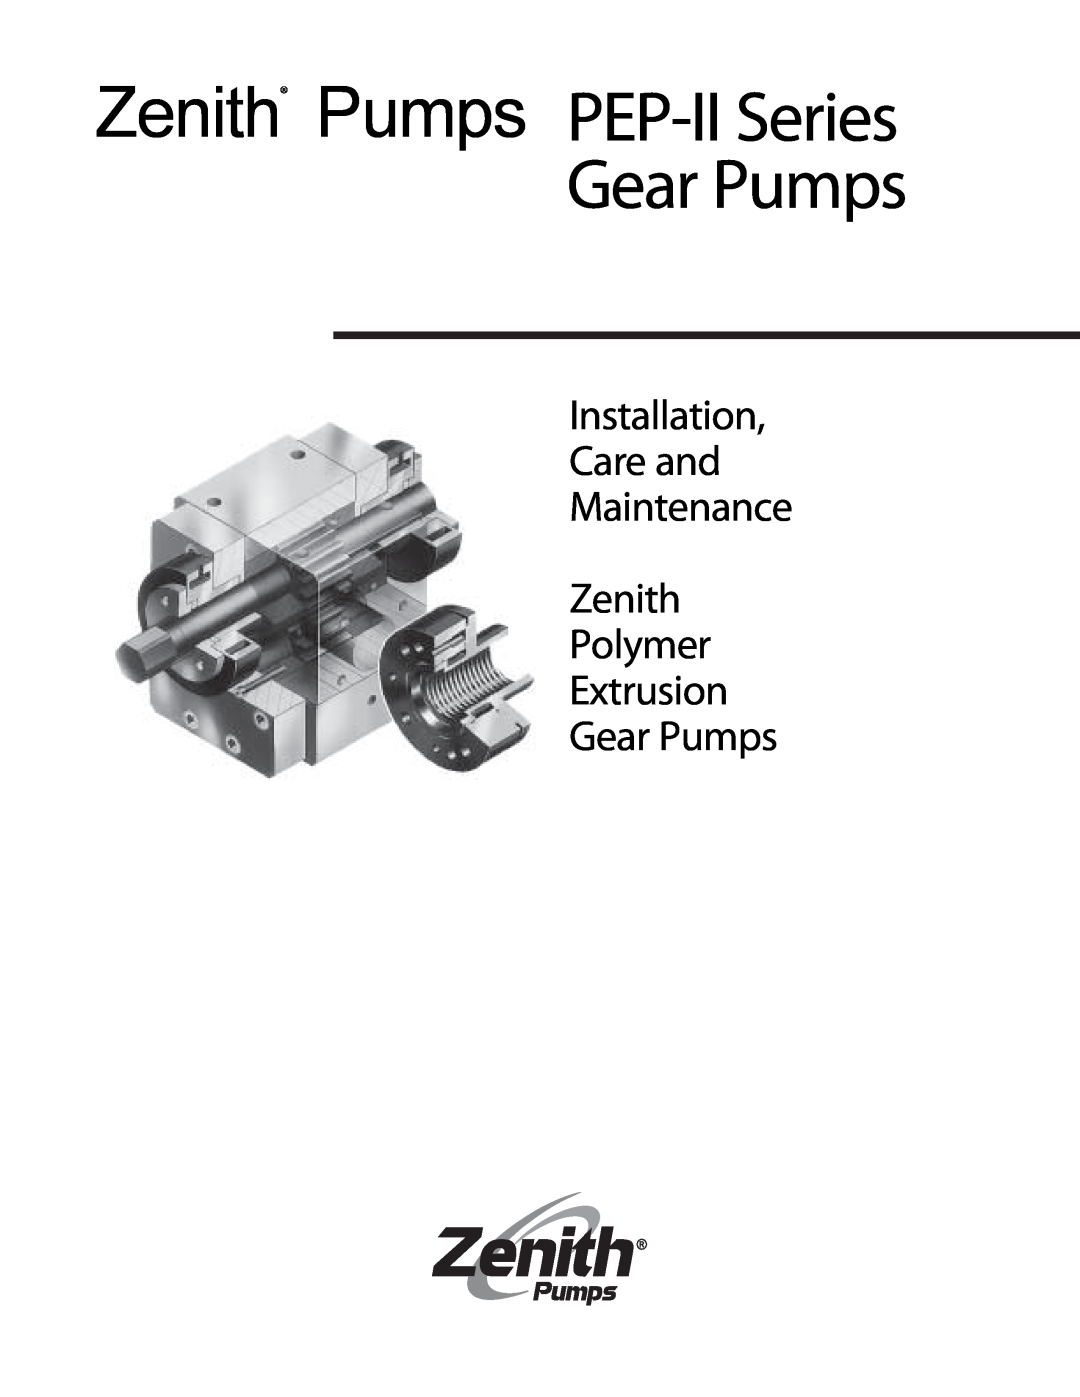 Zenith manual Zenith Pumps PEP-IISeries Gear Pumps, Installation Care and Maintenance Zenith Polymer 